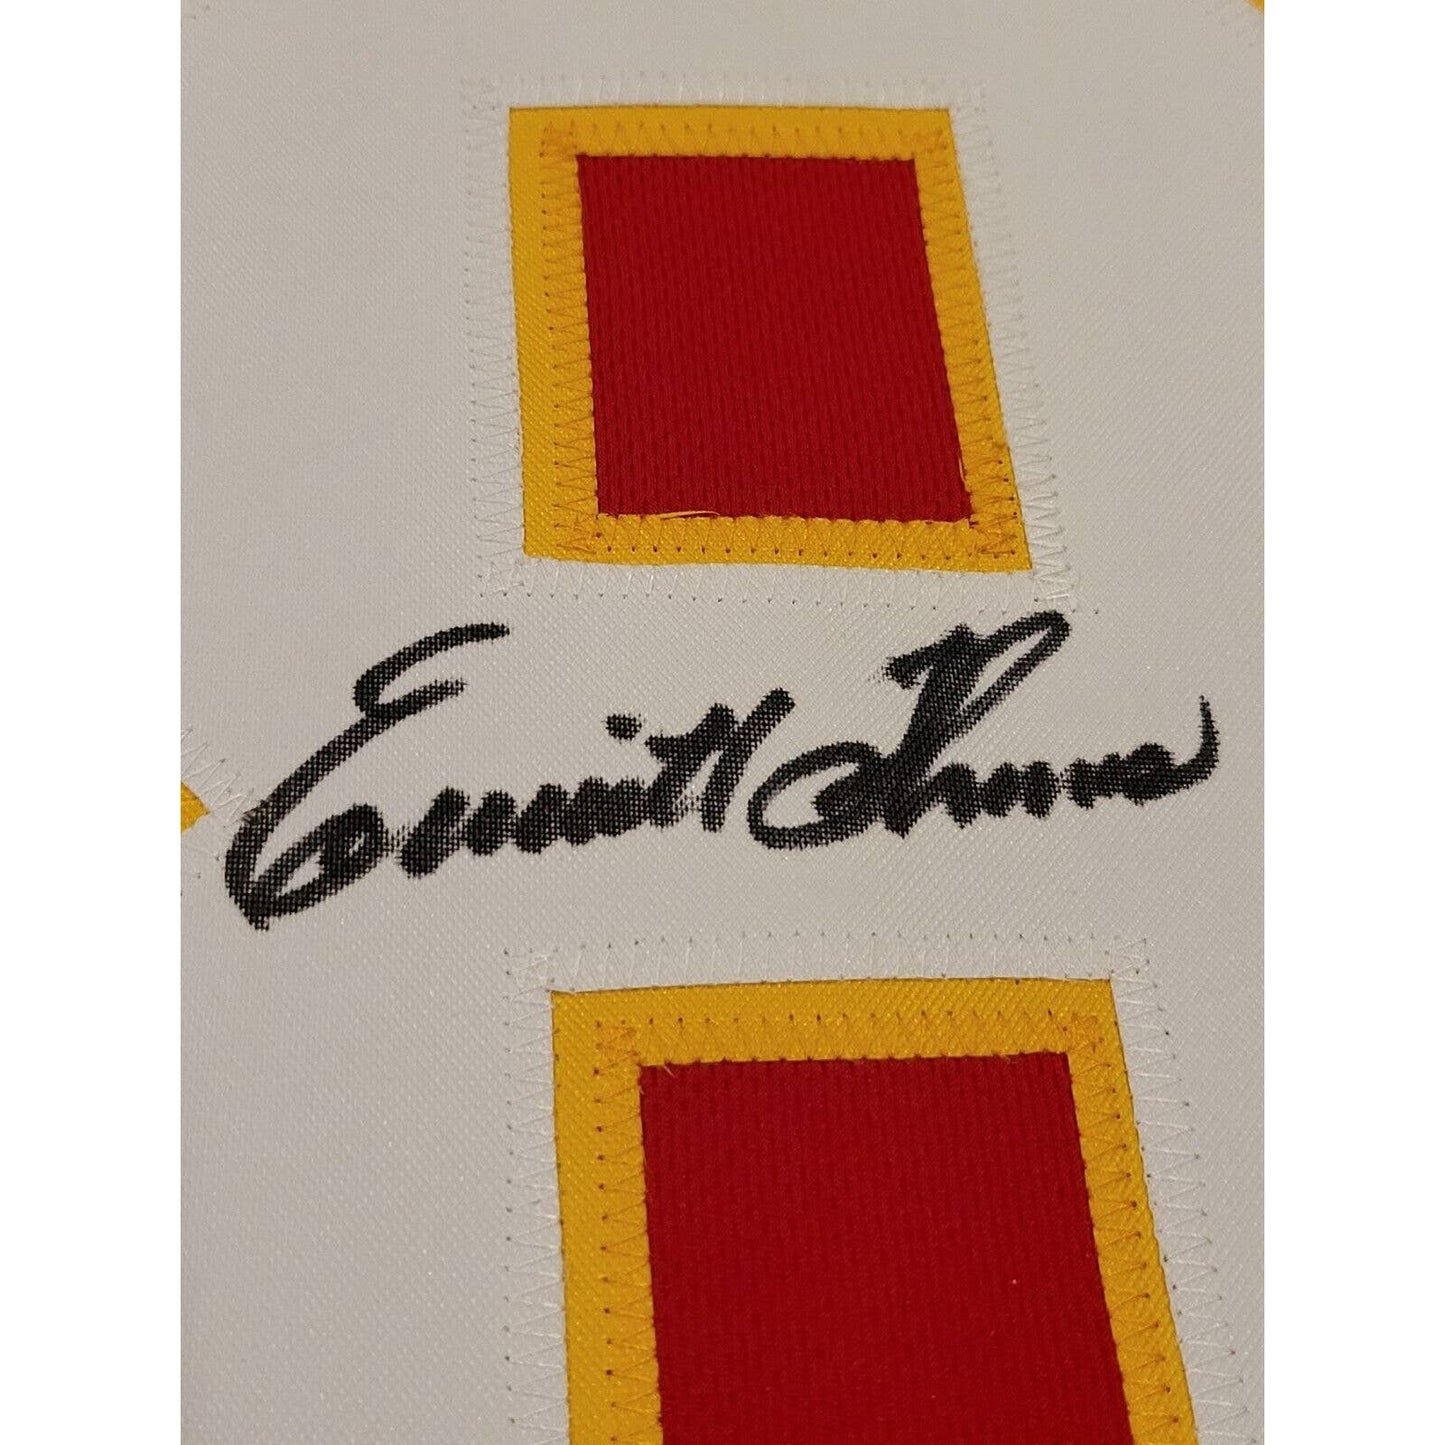 Emmitt Thomas Autographed/Signed Jersey JSA COA Kansas City Chiefs - TreasuresEvolved